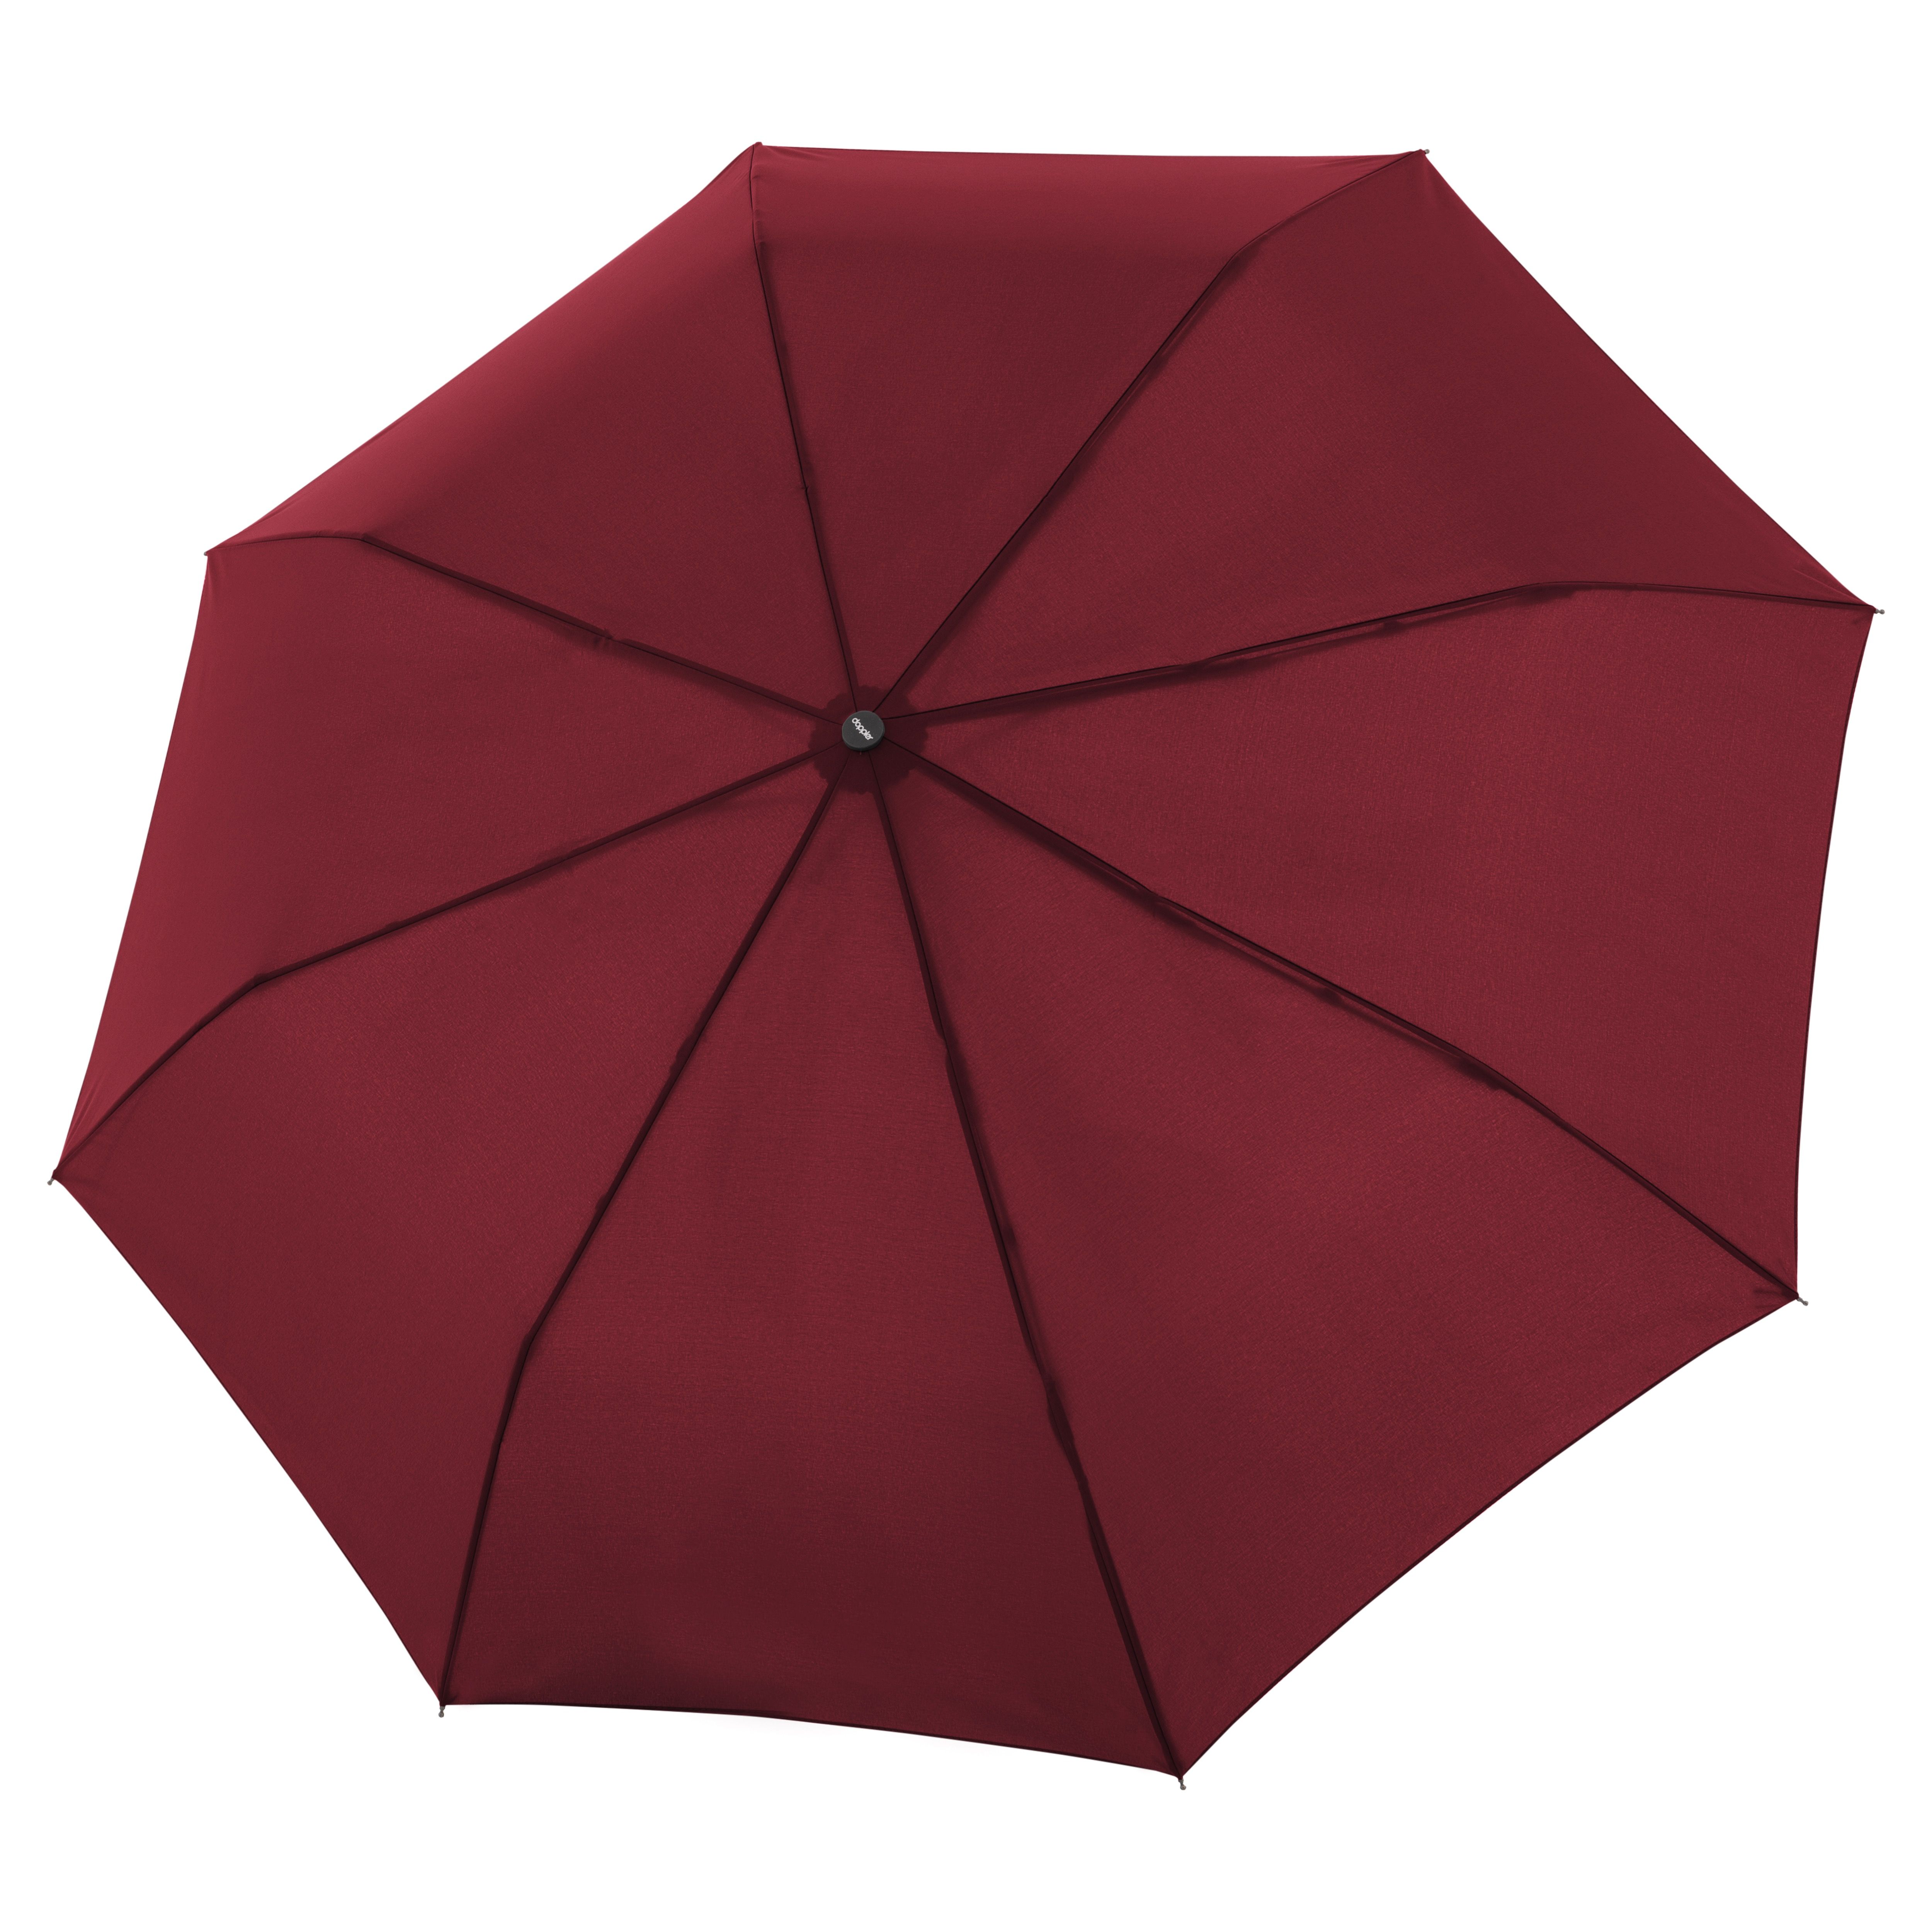 WÖHRL 10538295 Automatic | kaufen DOPPLER Fiber Regenschirm